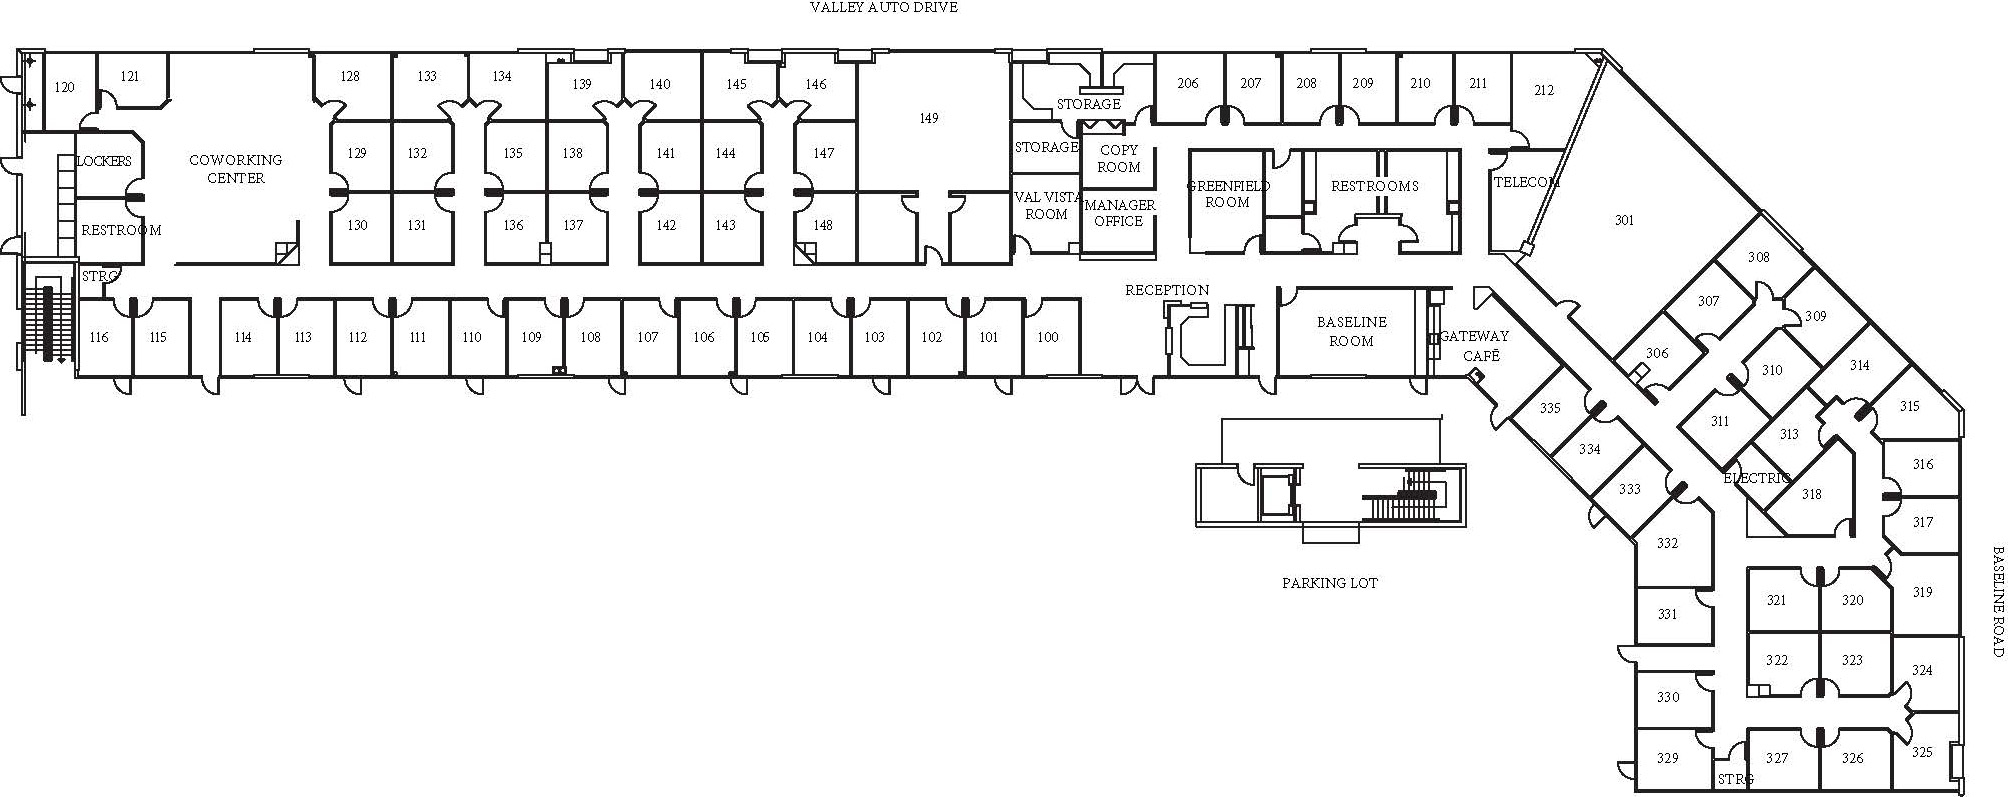 Office Facility Floorplan